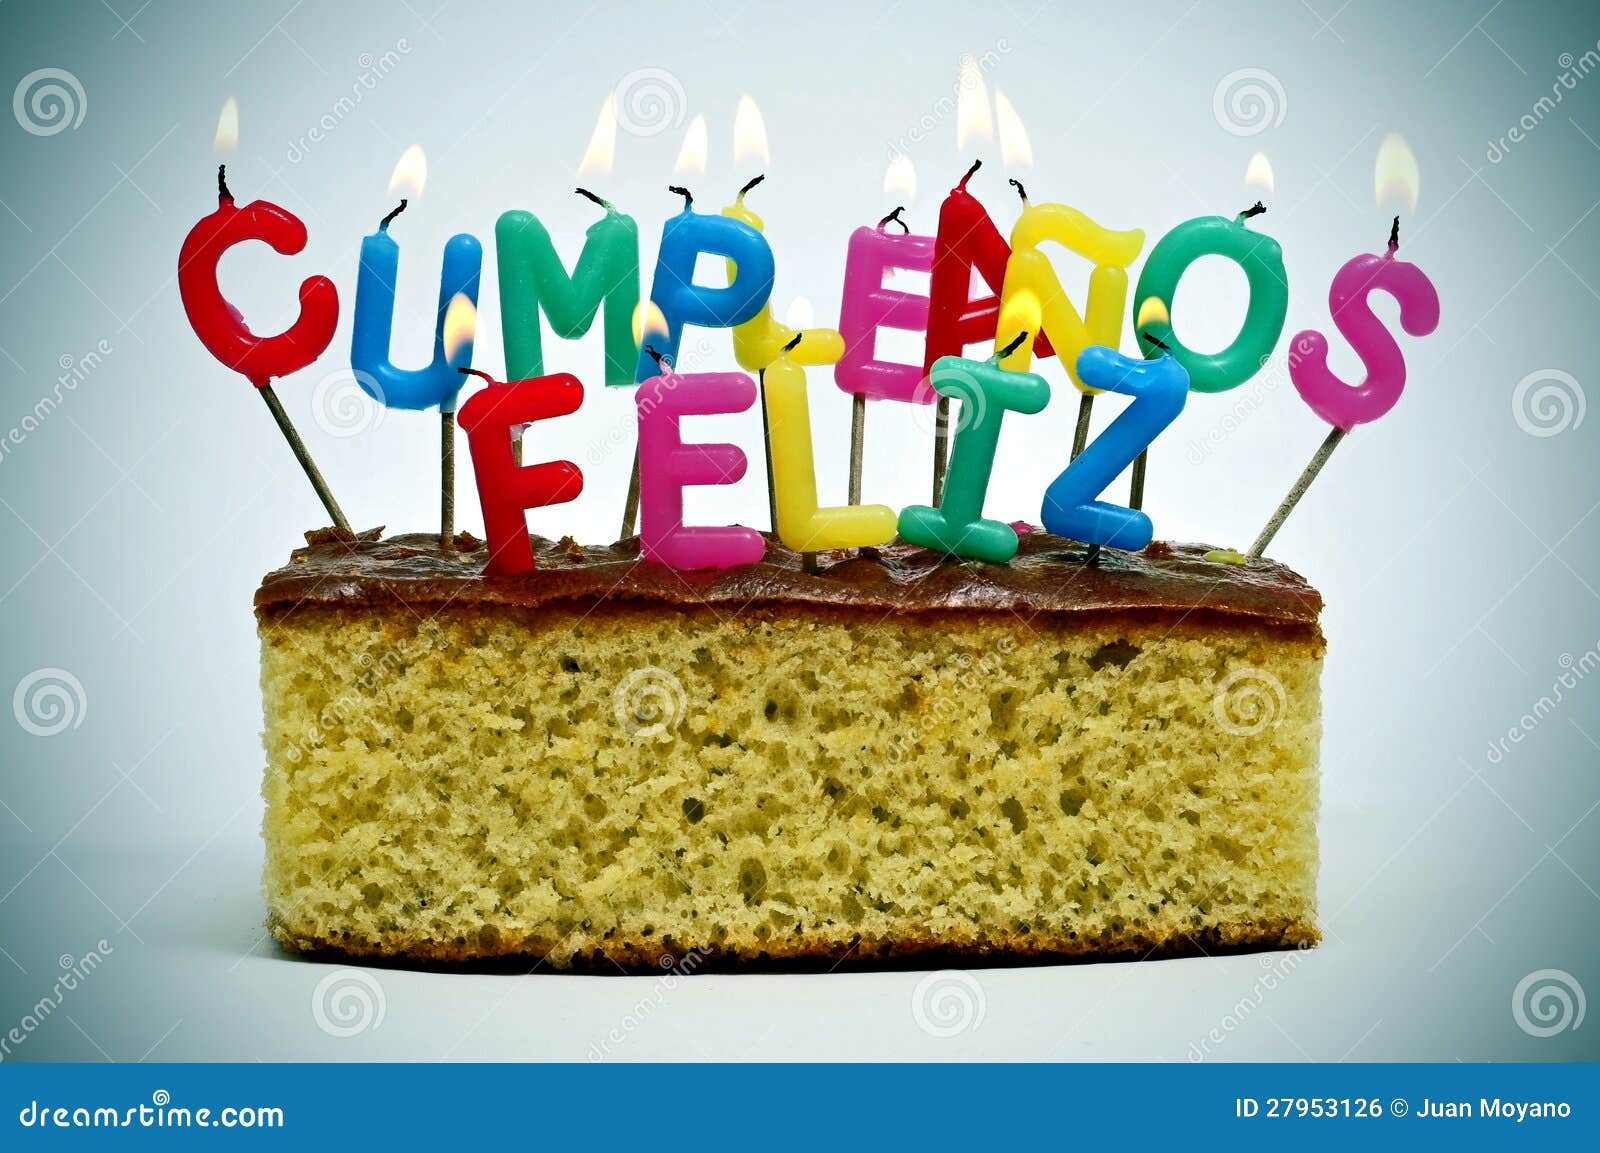 cumpleanos feliz, happy birthday in spanish